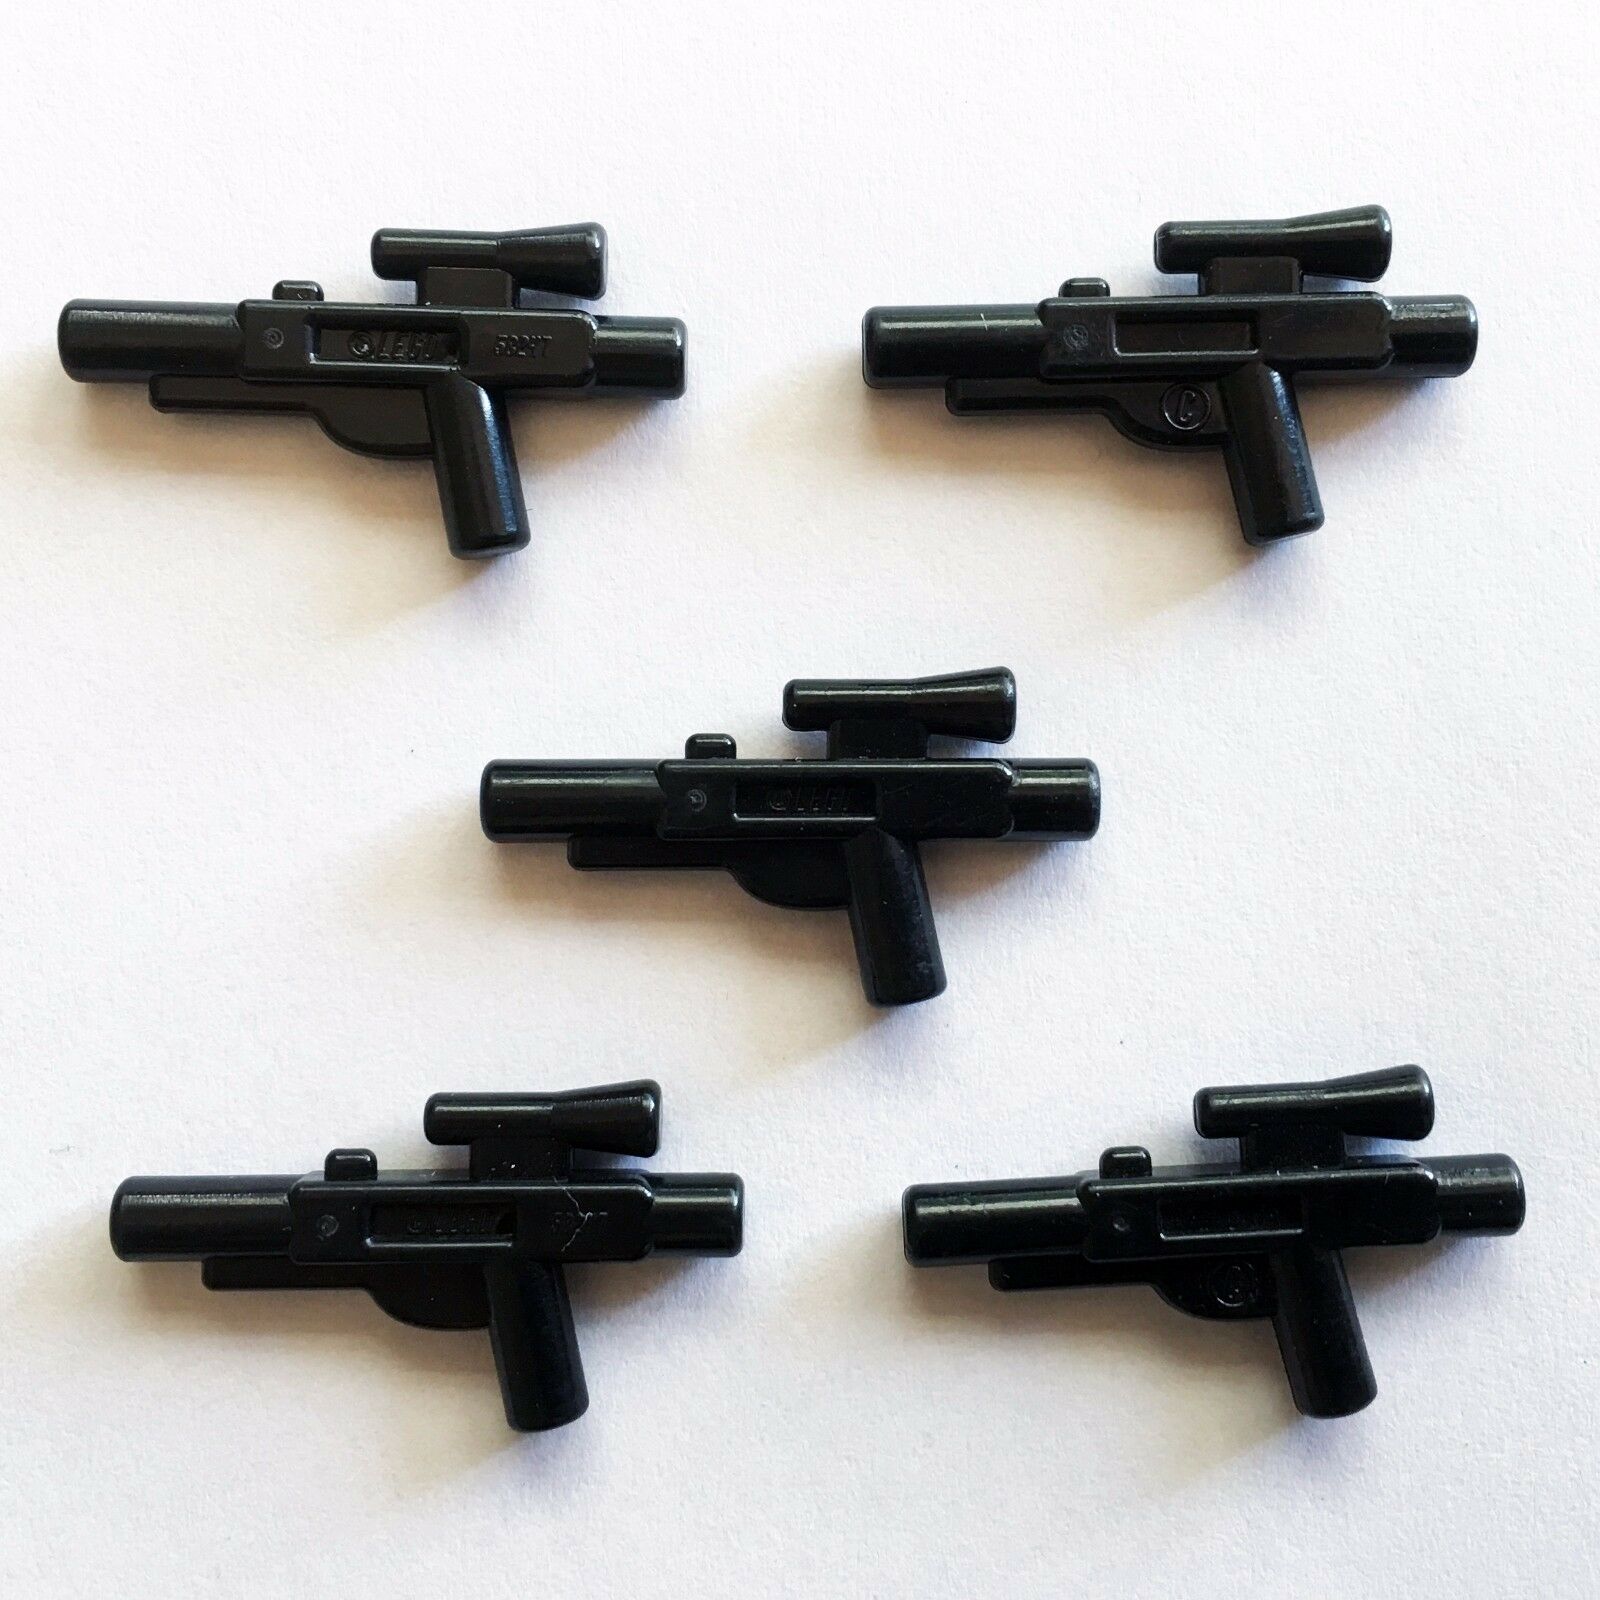 5 x STAR WARS lego BLASTER GUN MEDIUM five battle Minifigure weapons clone wars NEW - Bricks & Figures